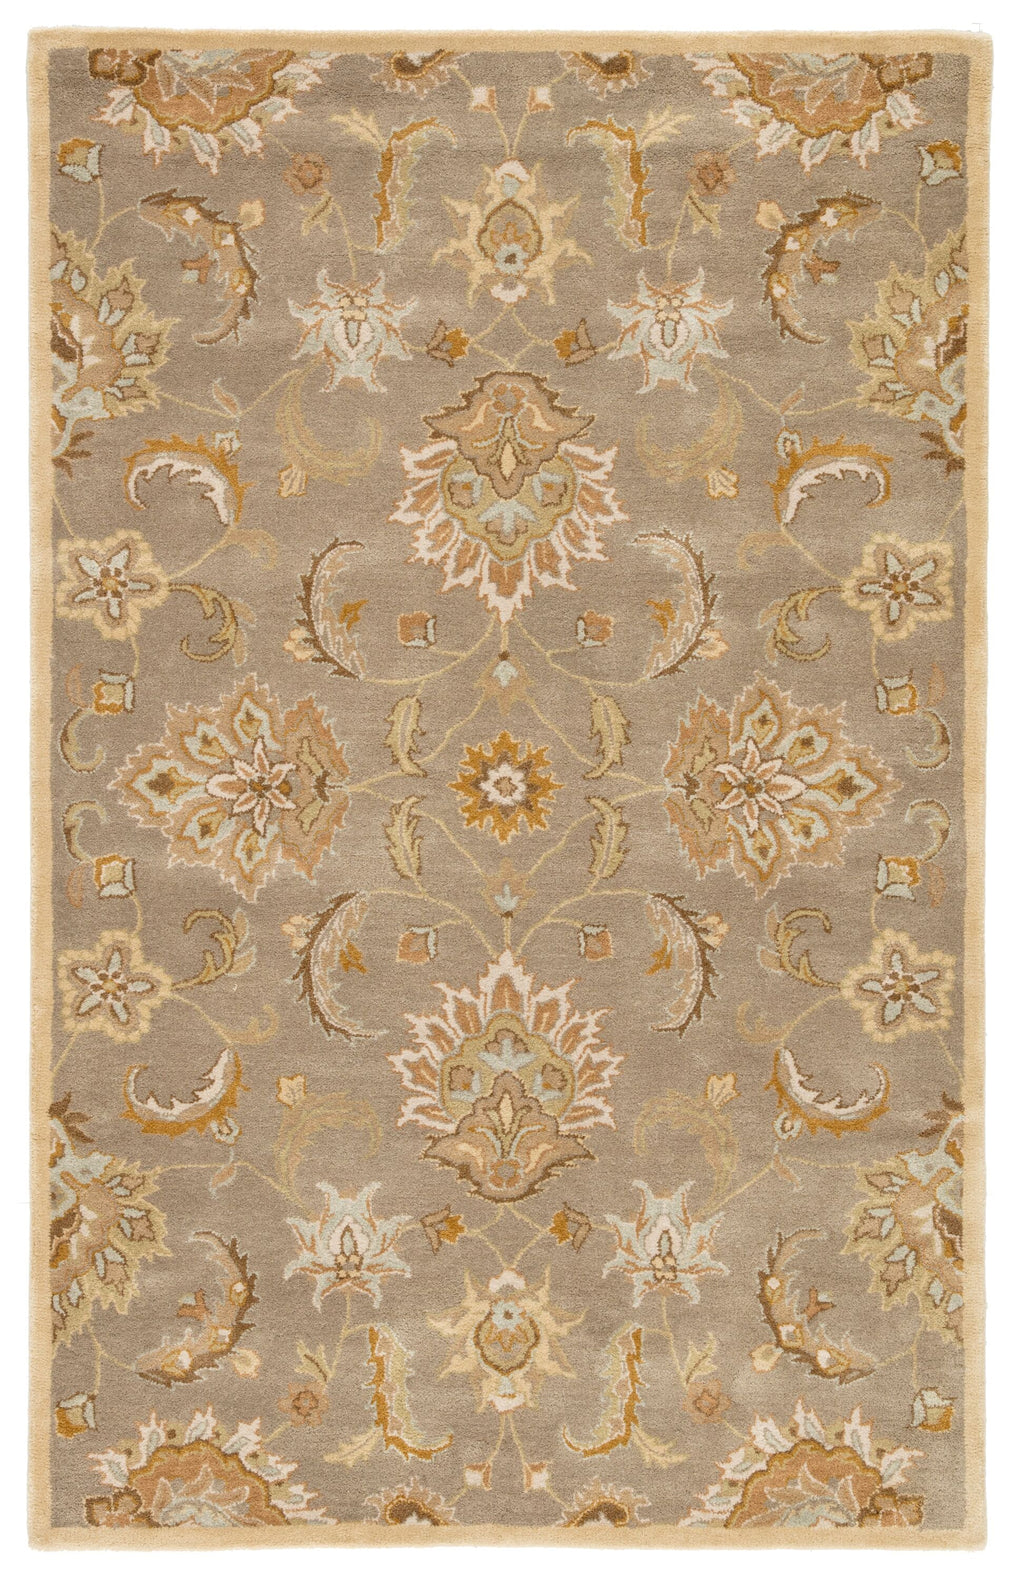 my14 abers handmade floral gray beige area rug design by jaipur 1